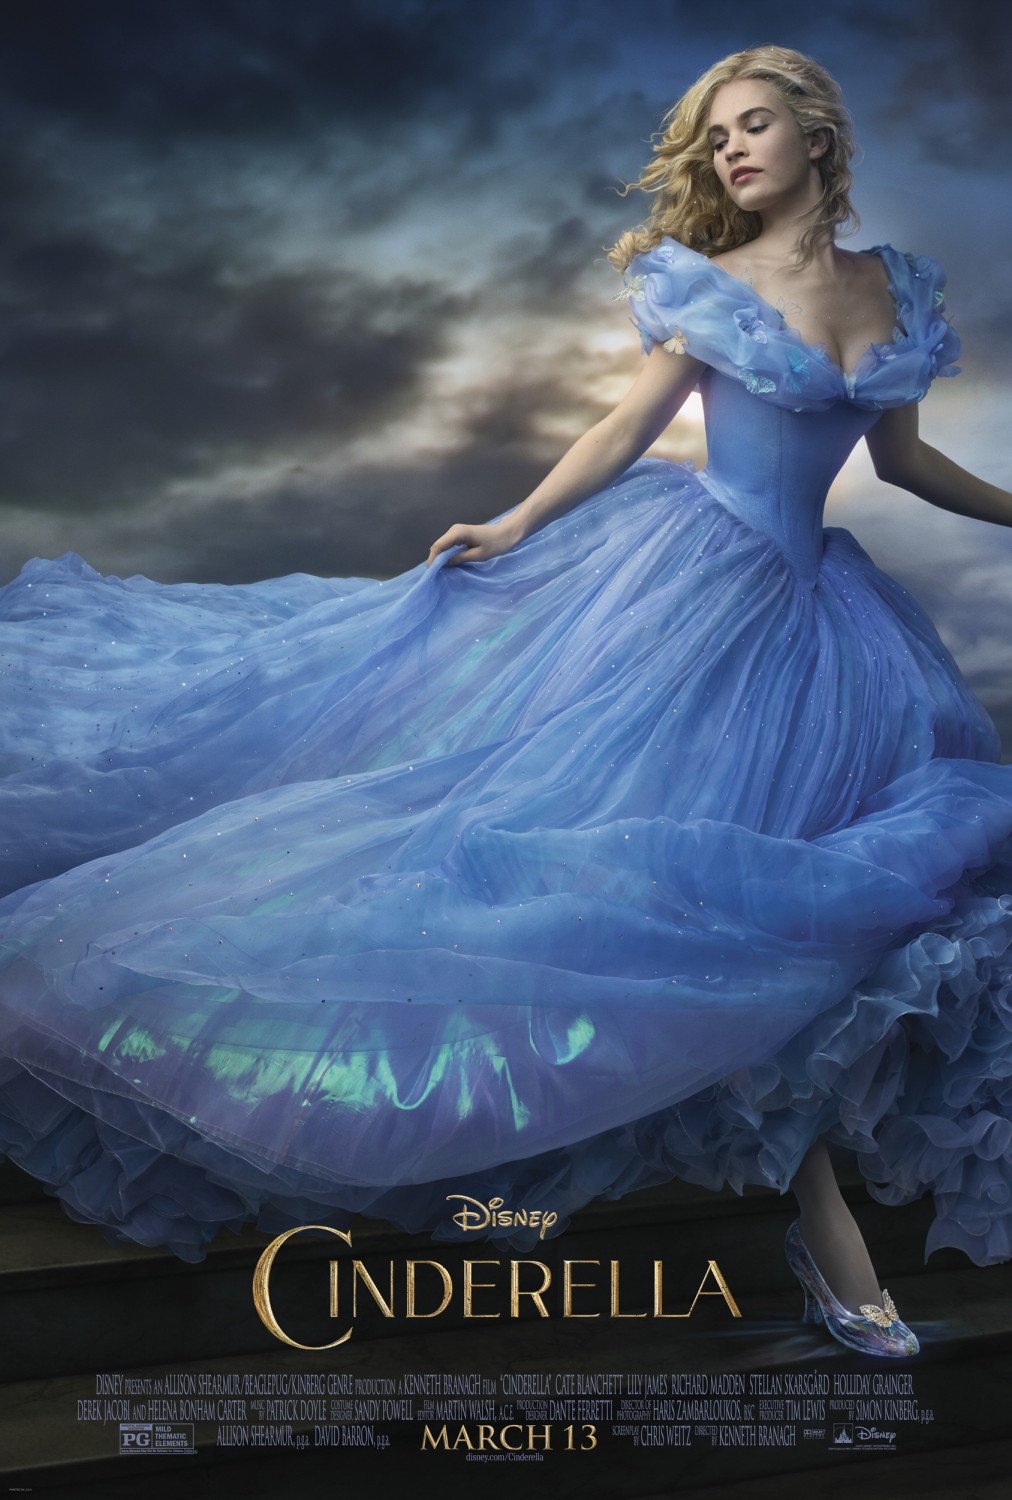 Cinderella film review: Can Disney recapture the magic?